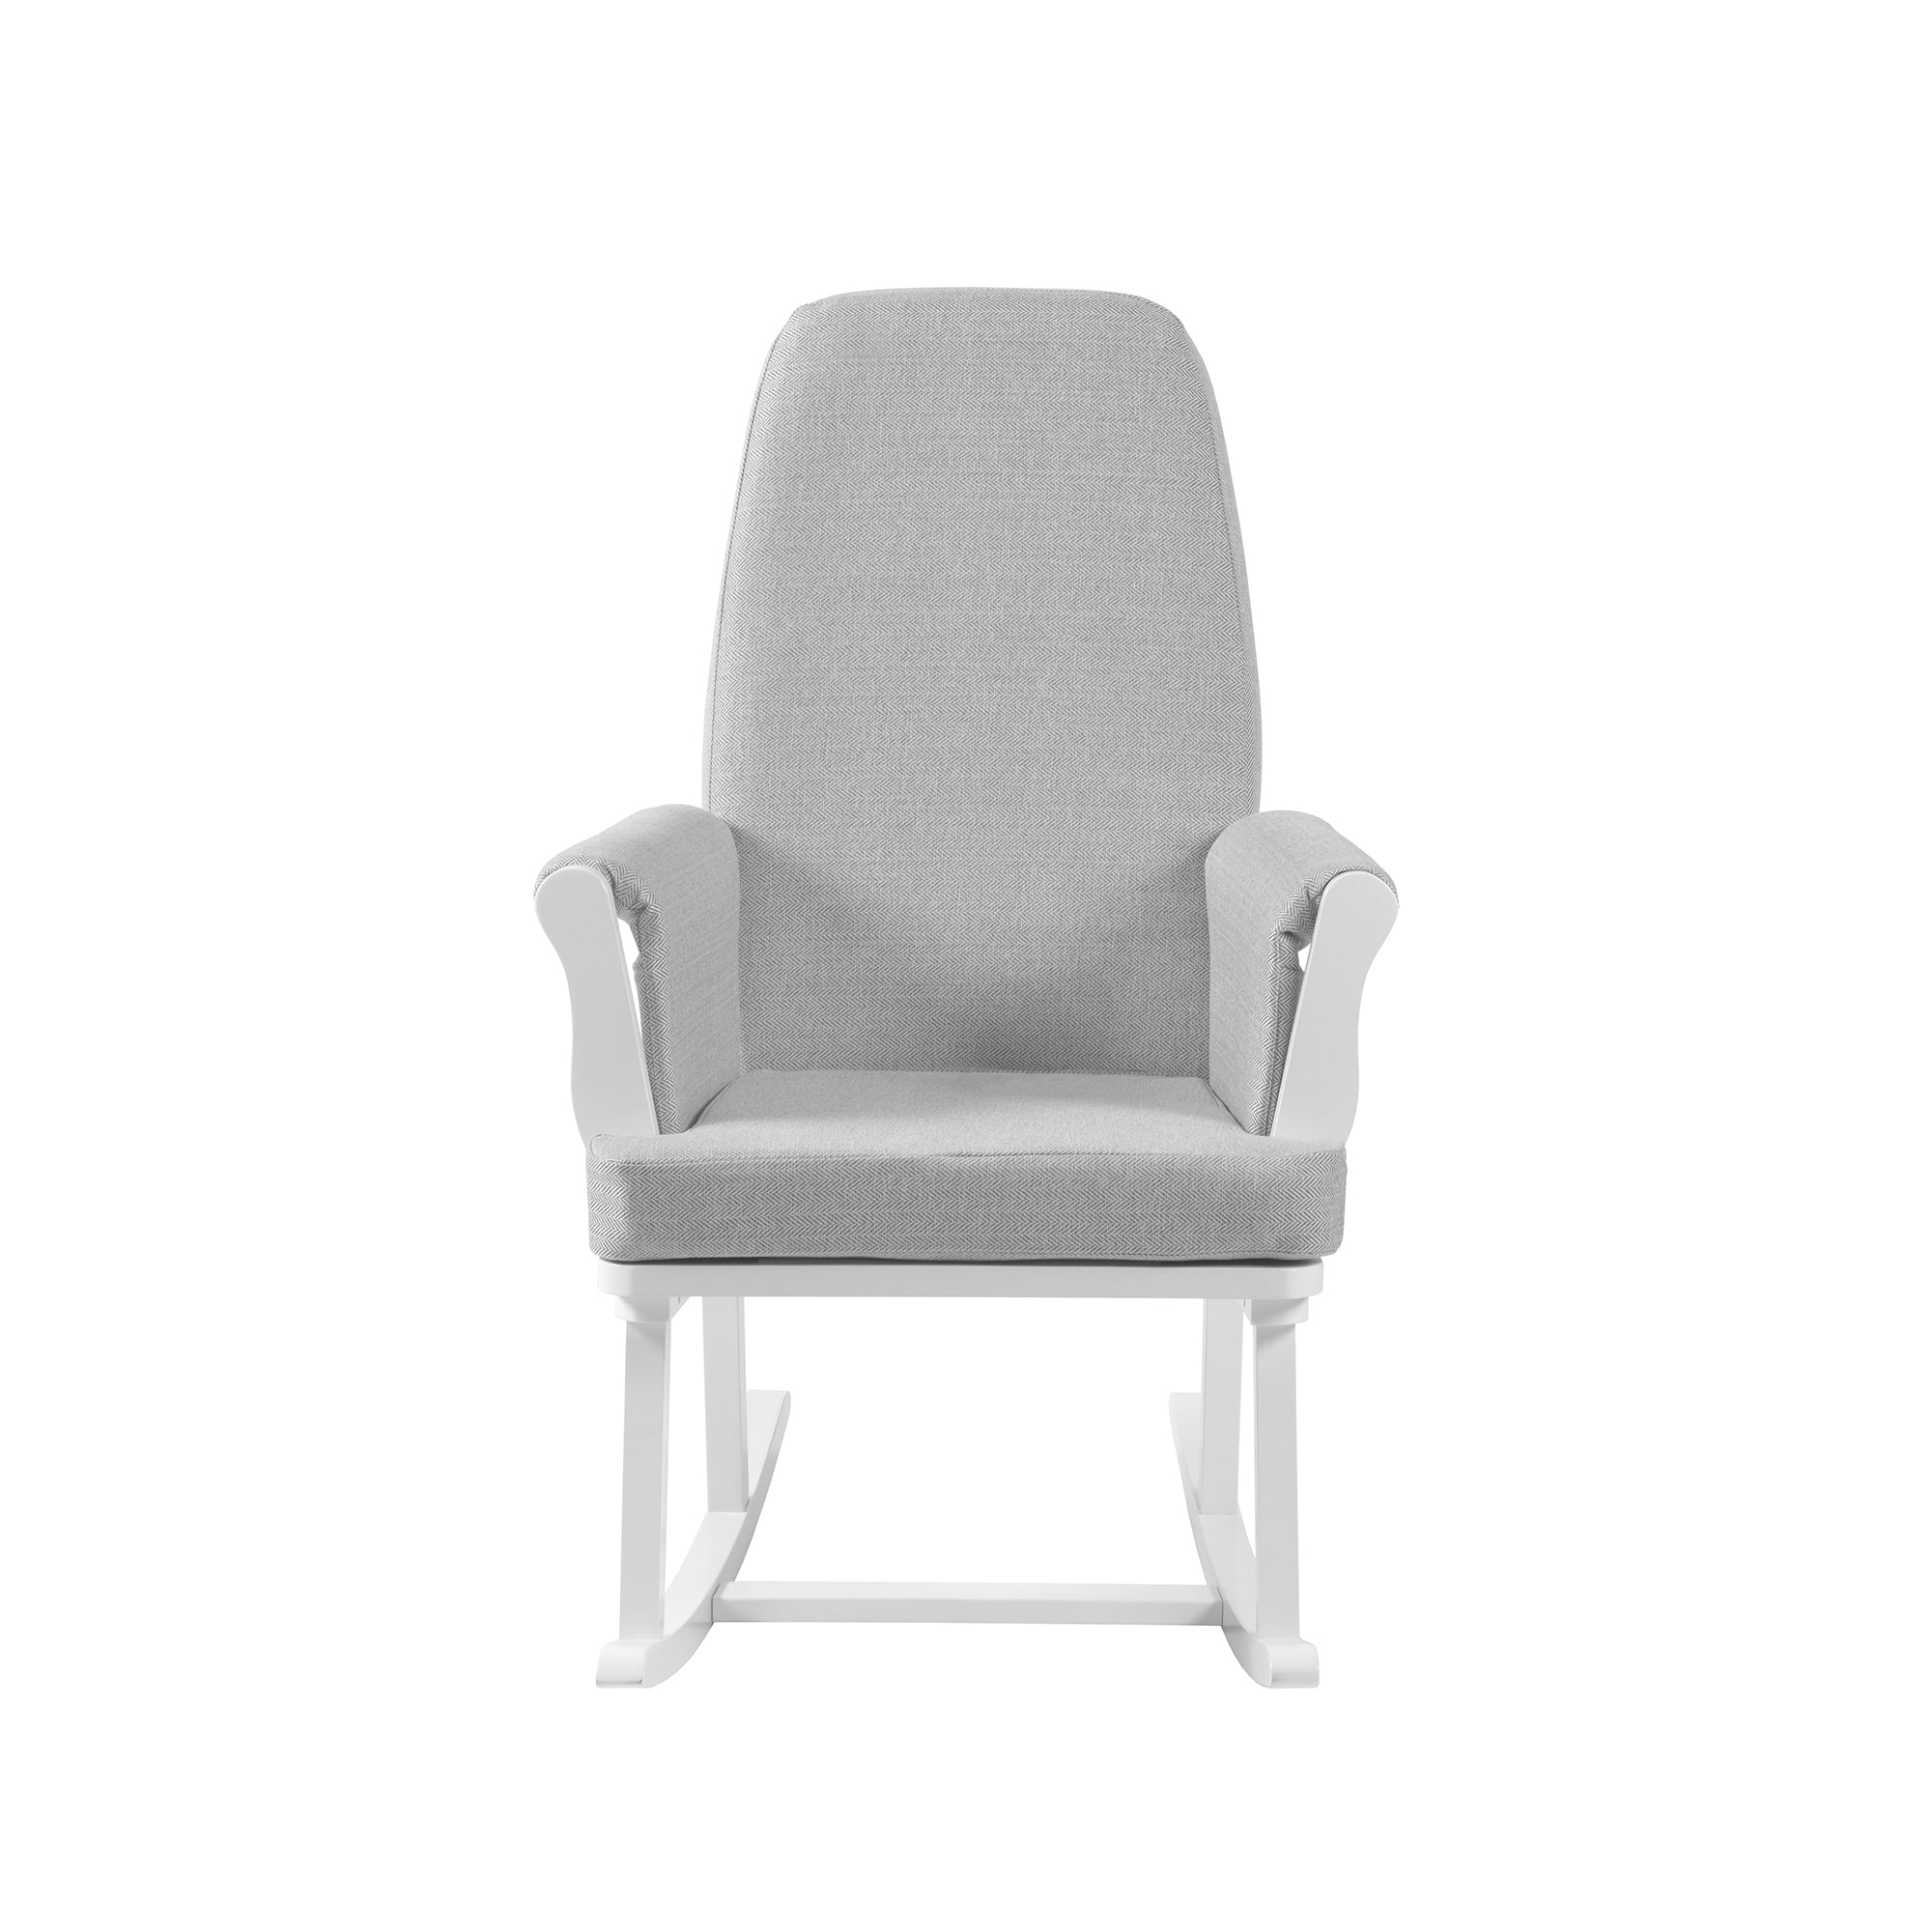 Haldon Nursing Rocking Chair Grey Chevron Special